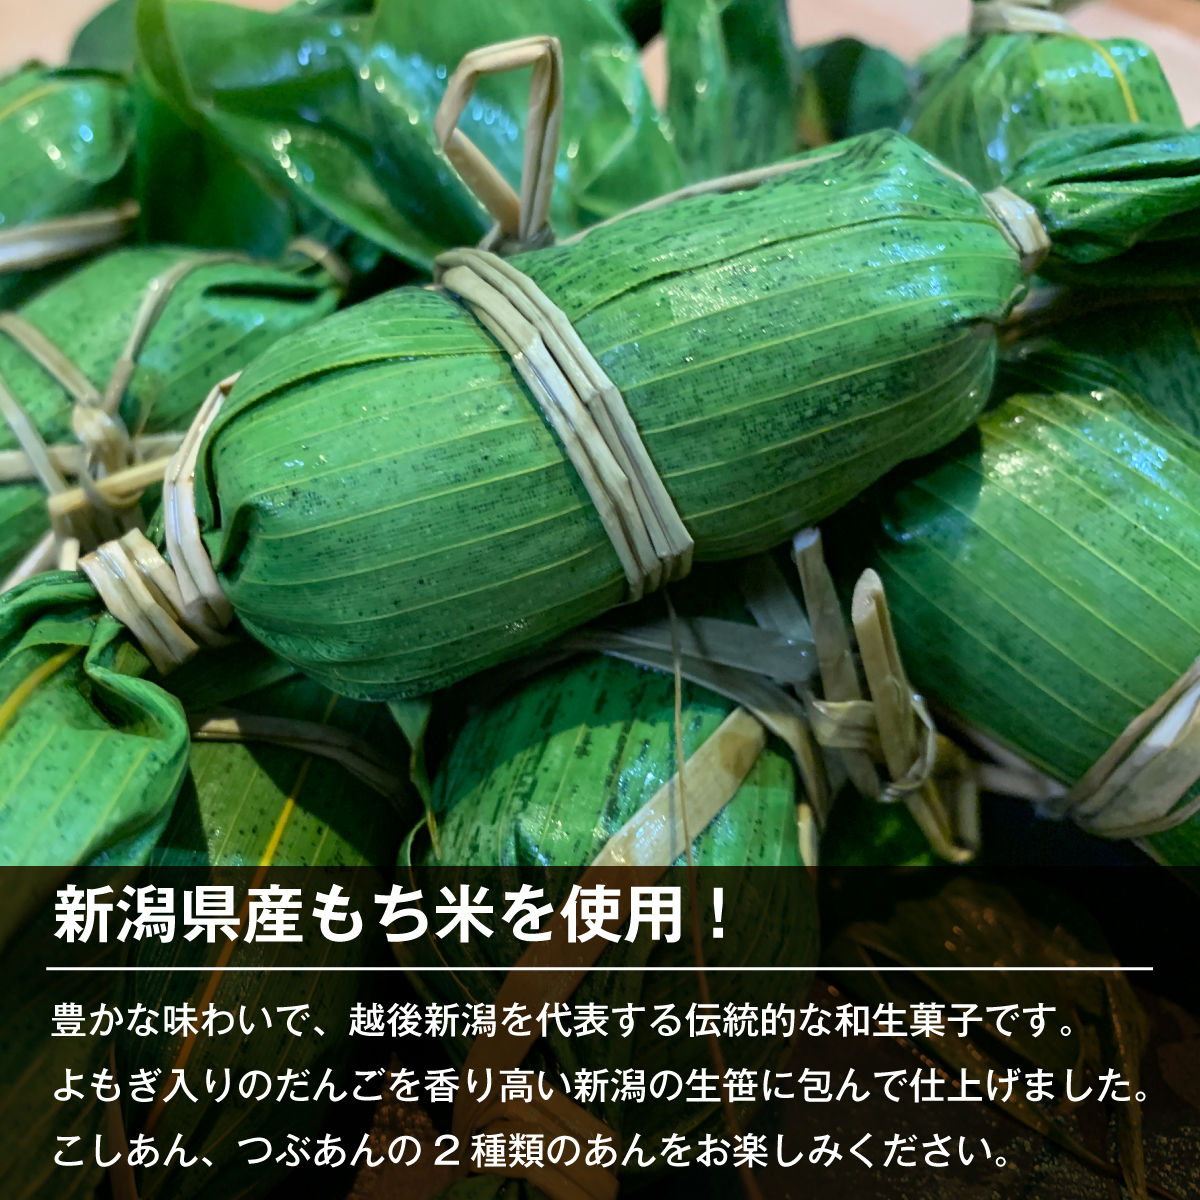 seihyo-. dango ........... miso .. Niigata special product ....20 piece insertion Niigata earth production mochi cloth handmade raw . dango ....